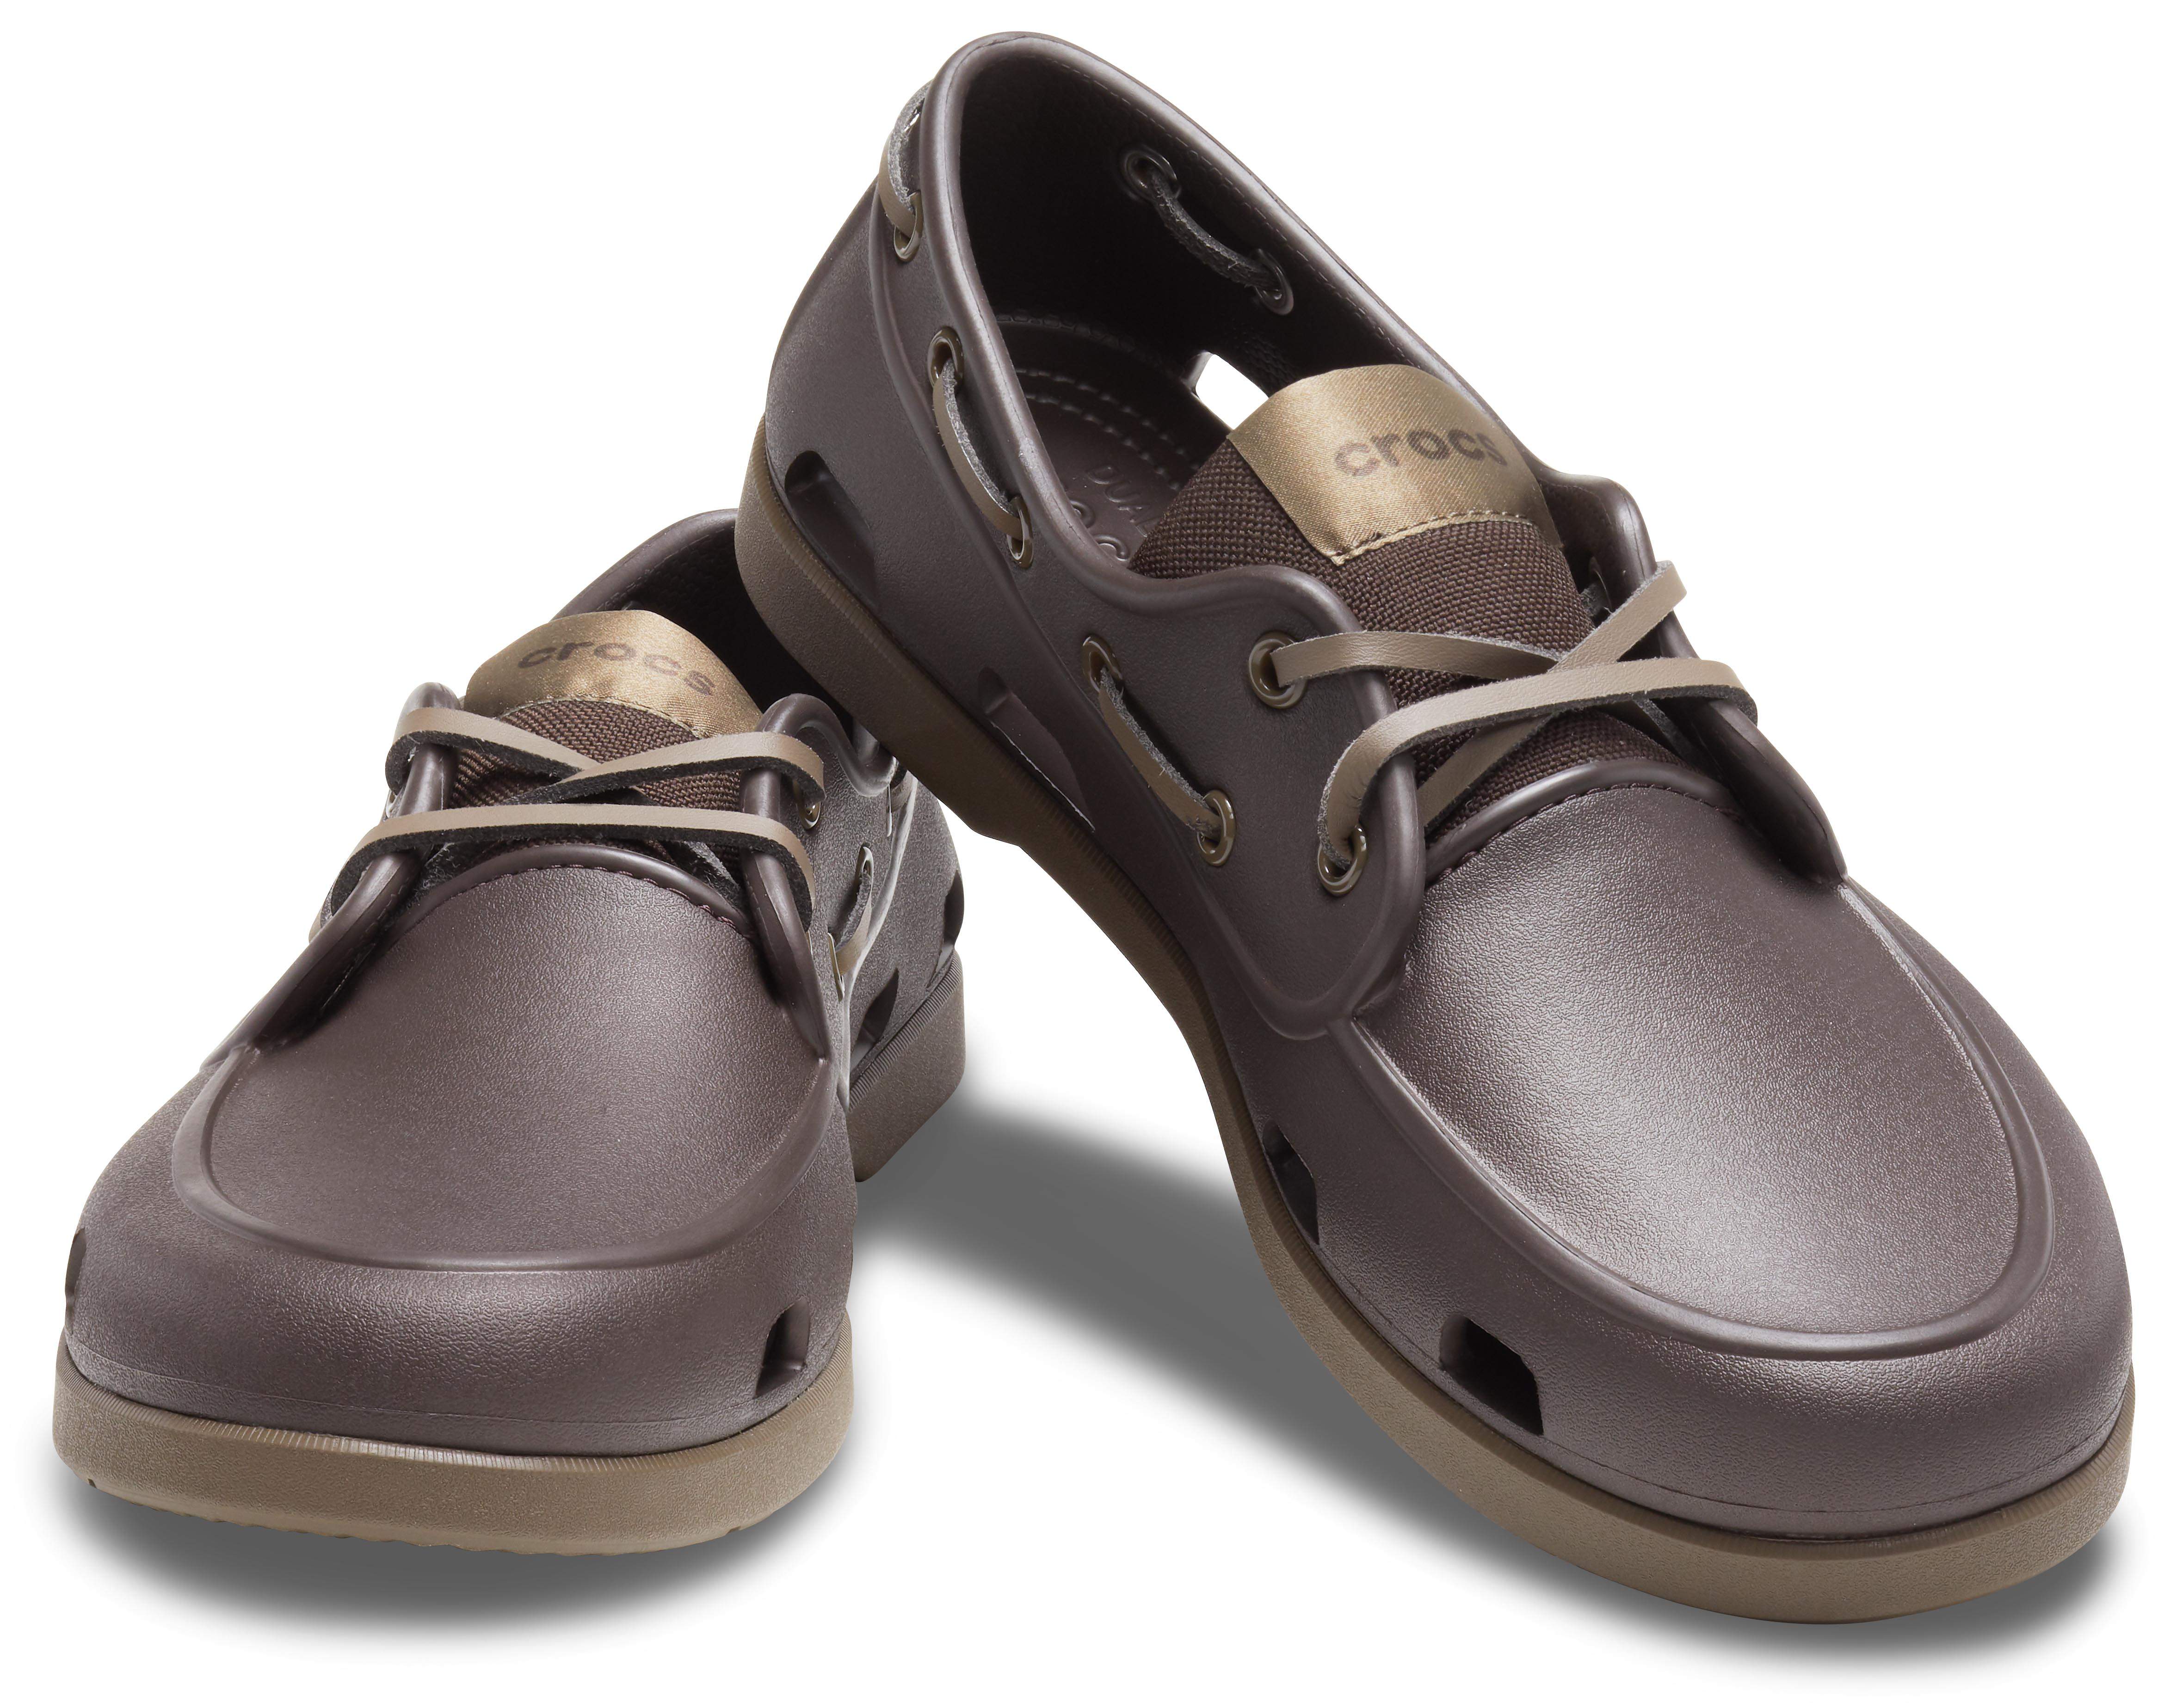 crocs leather boat shoes